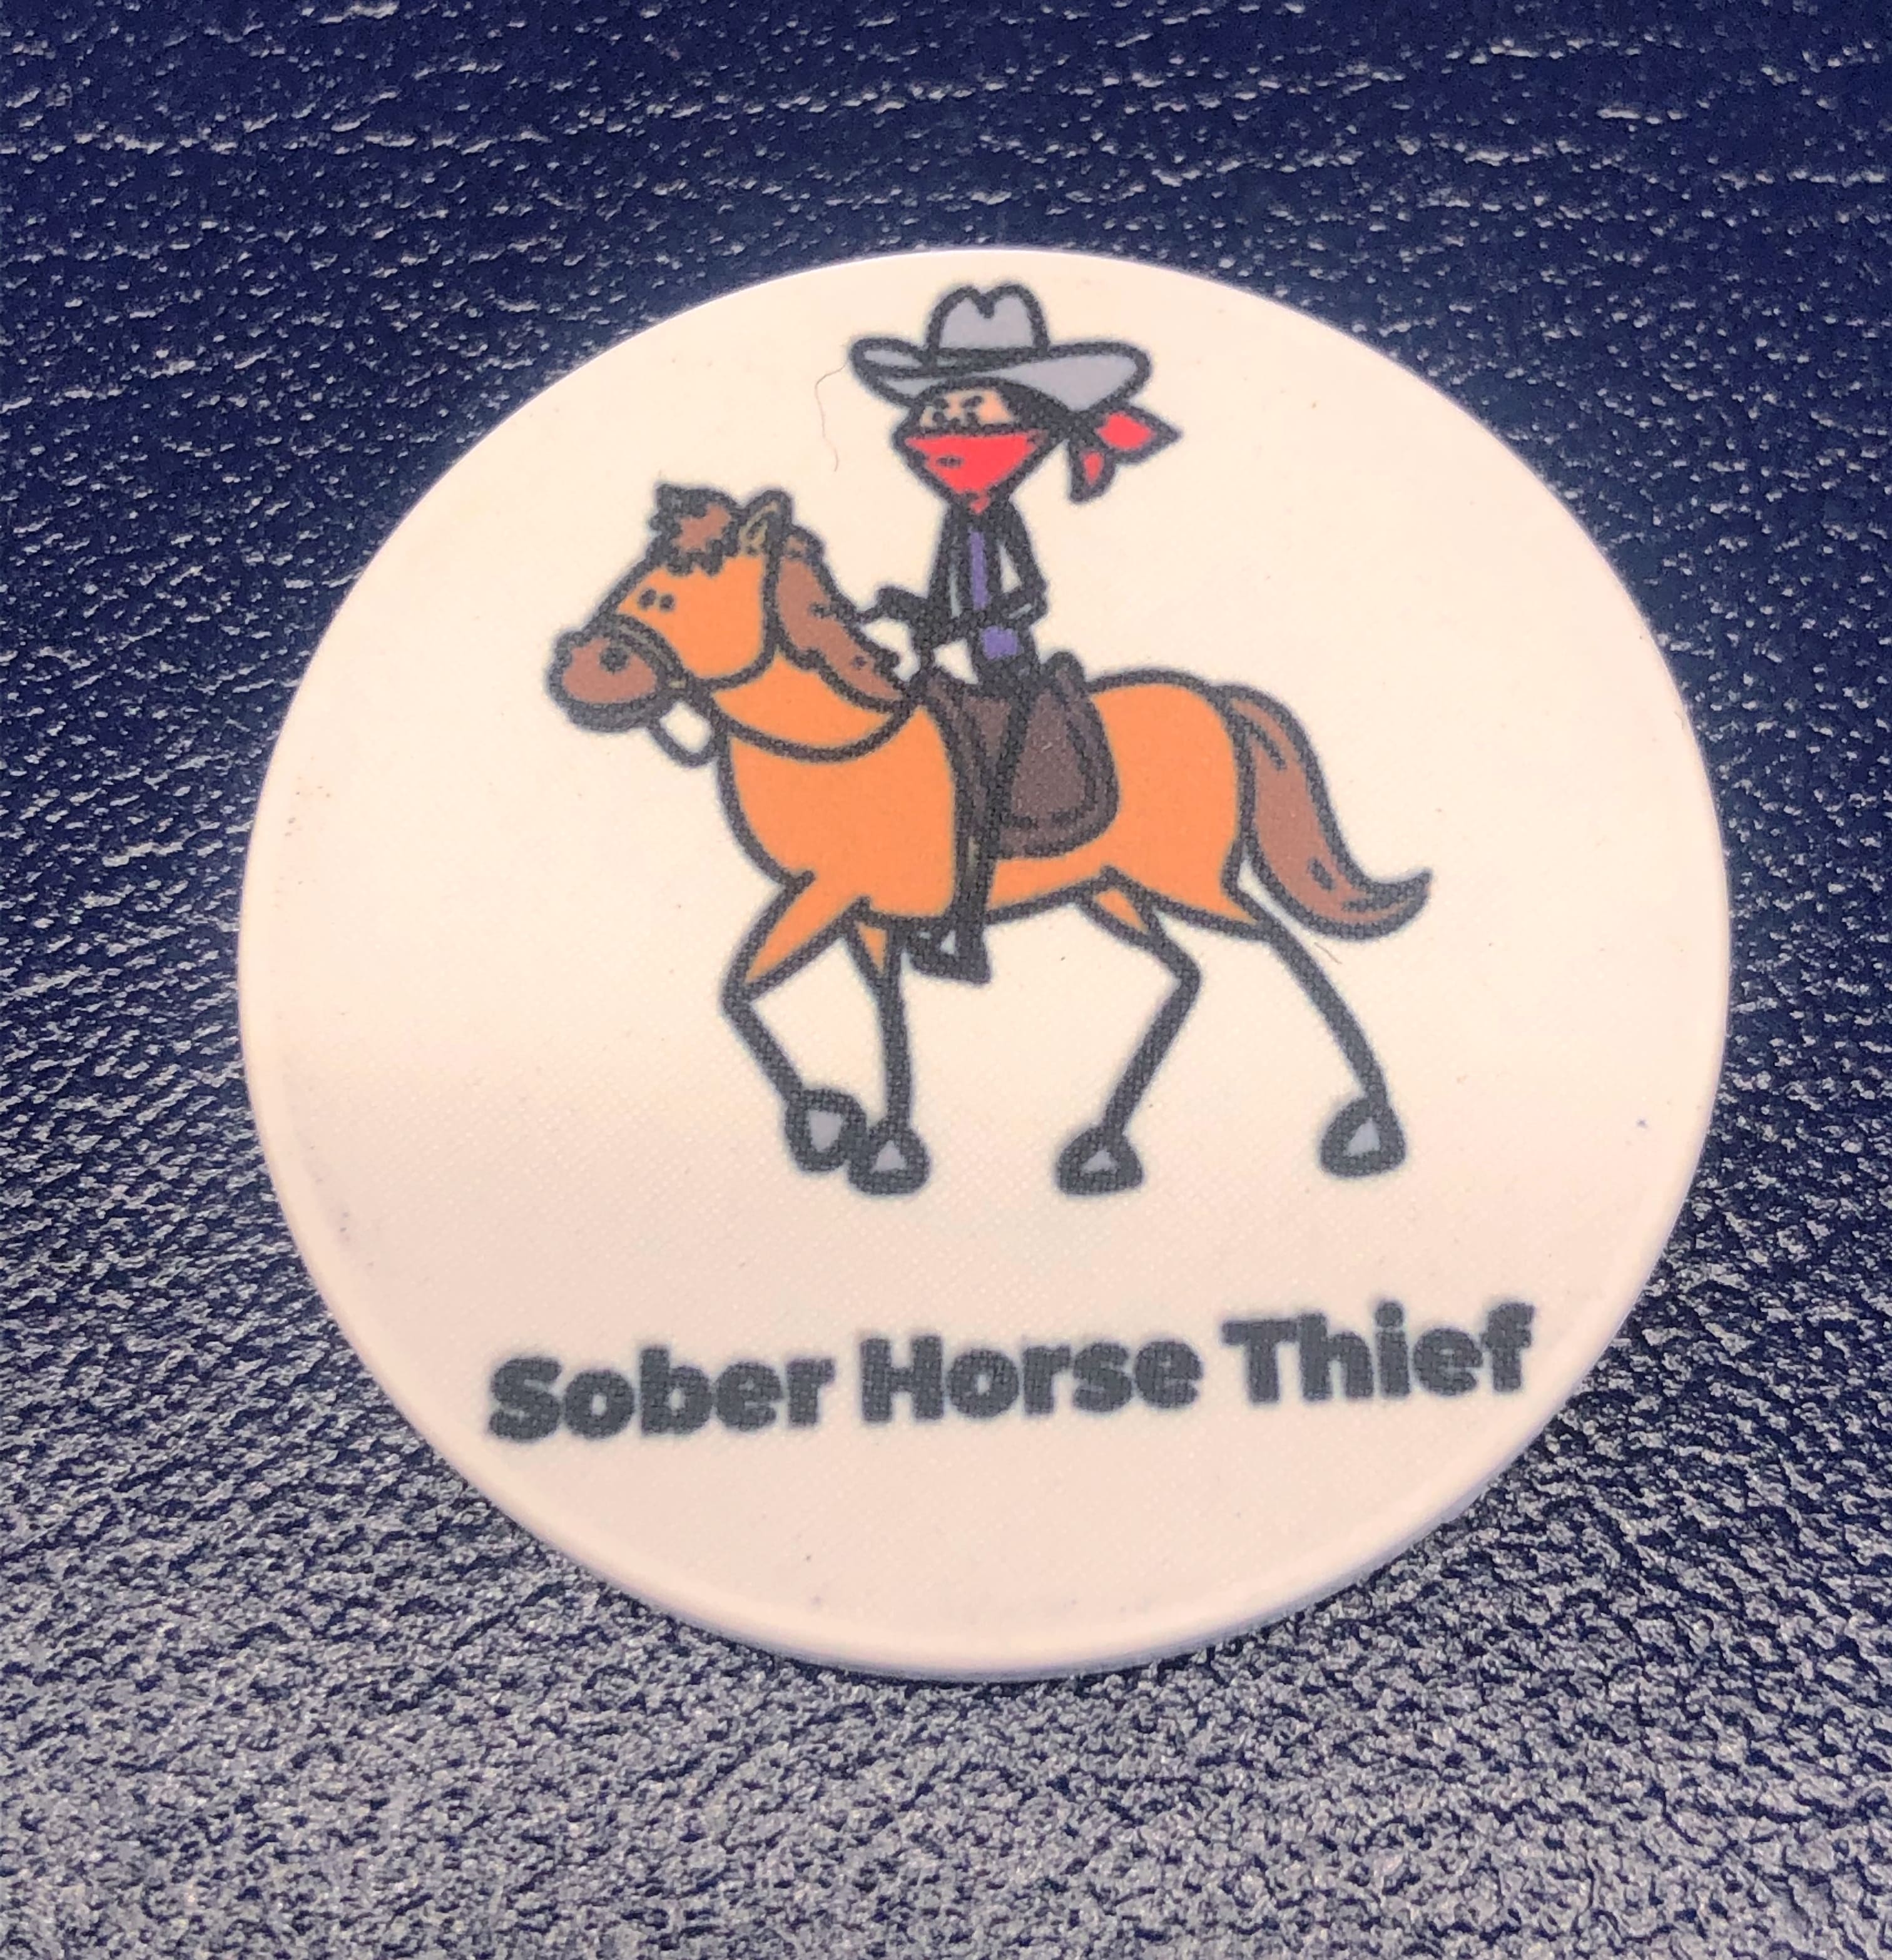 Sober Horse Thief